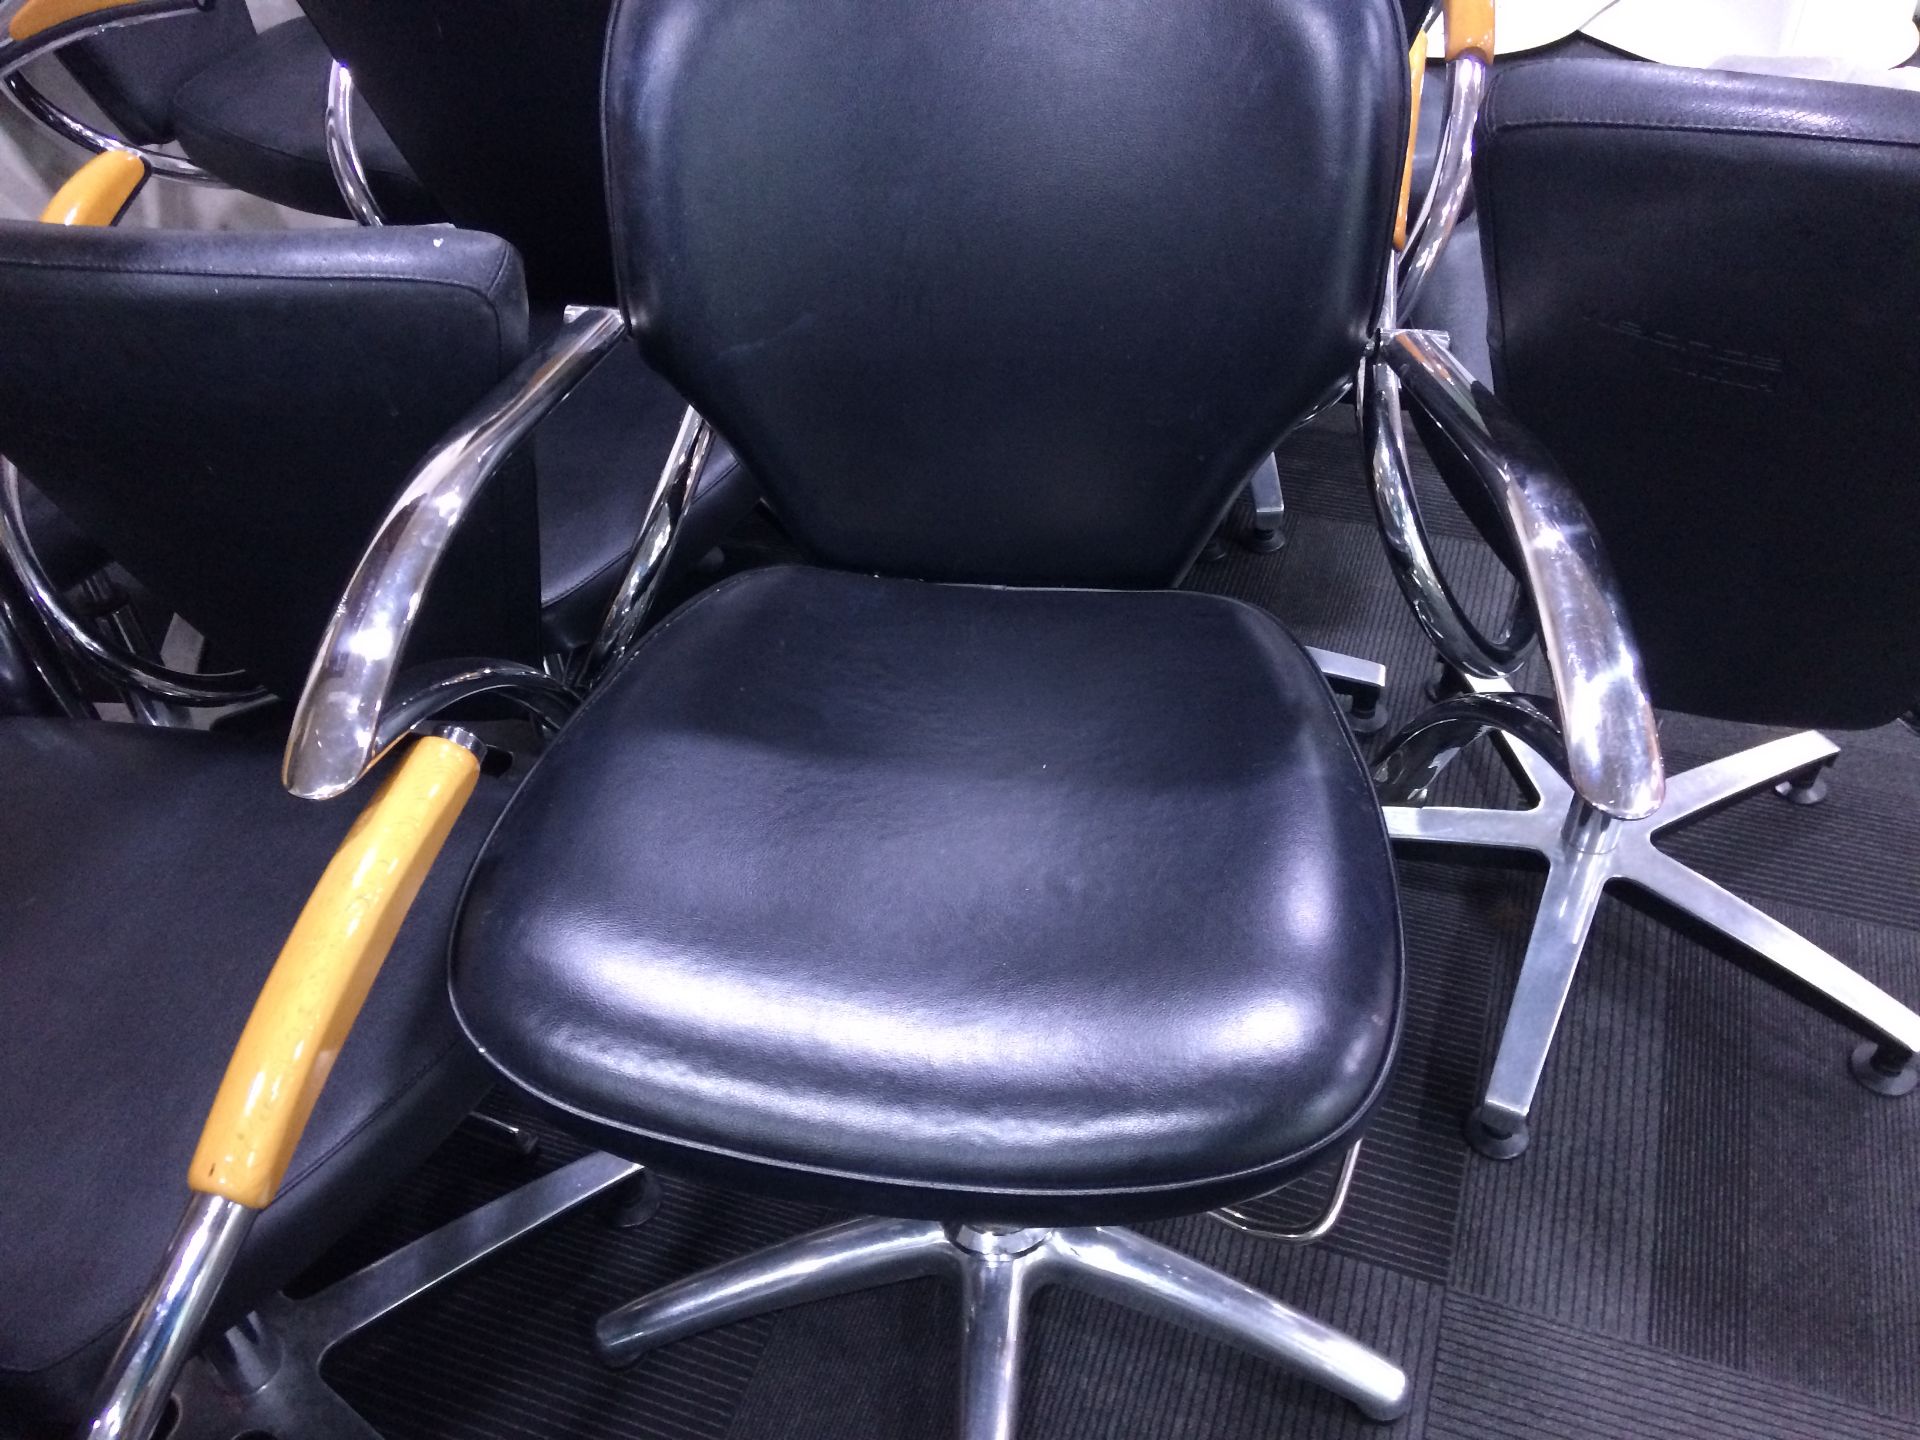 2 x Black / chrome beauty salon chairs ( Leather )